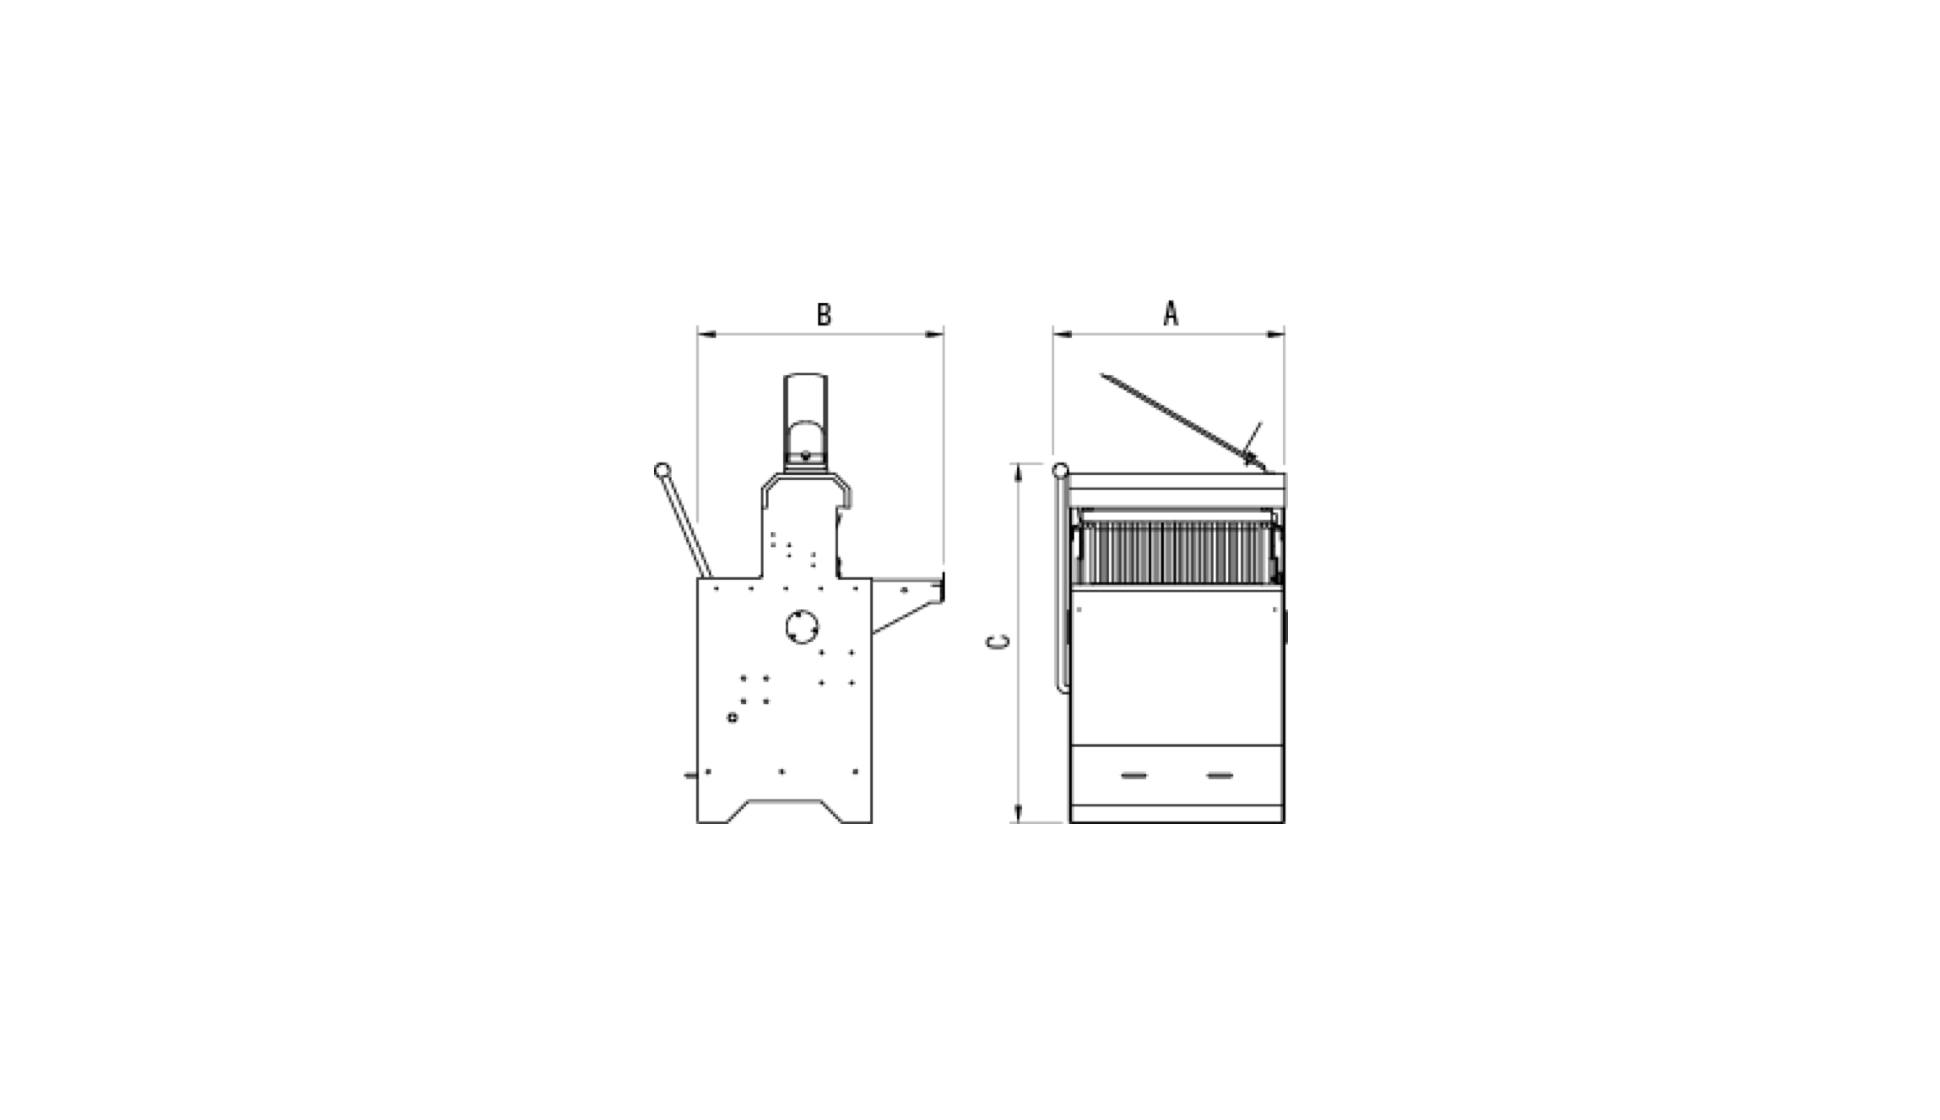 02.09.01.02 EDL 444 Bread Slicer Ekmek Dilimleme Makinesi